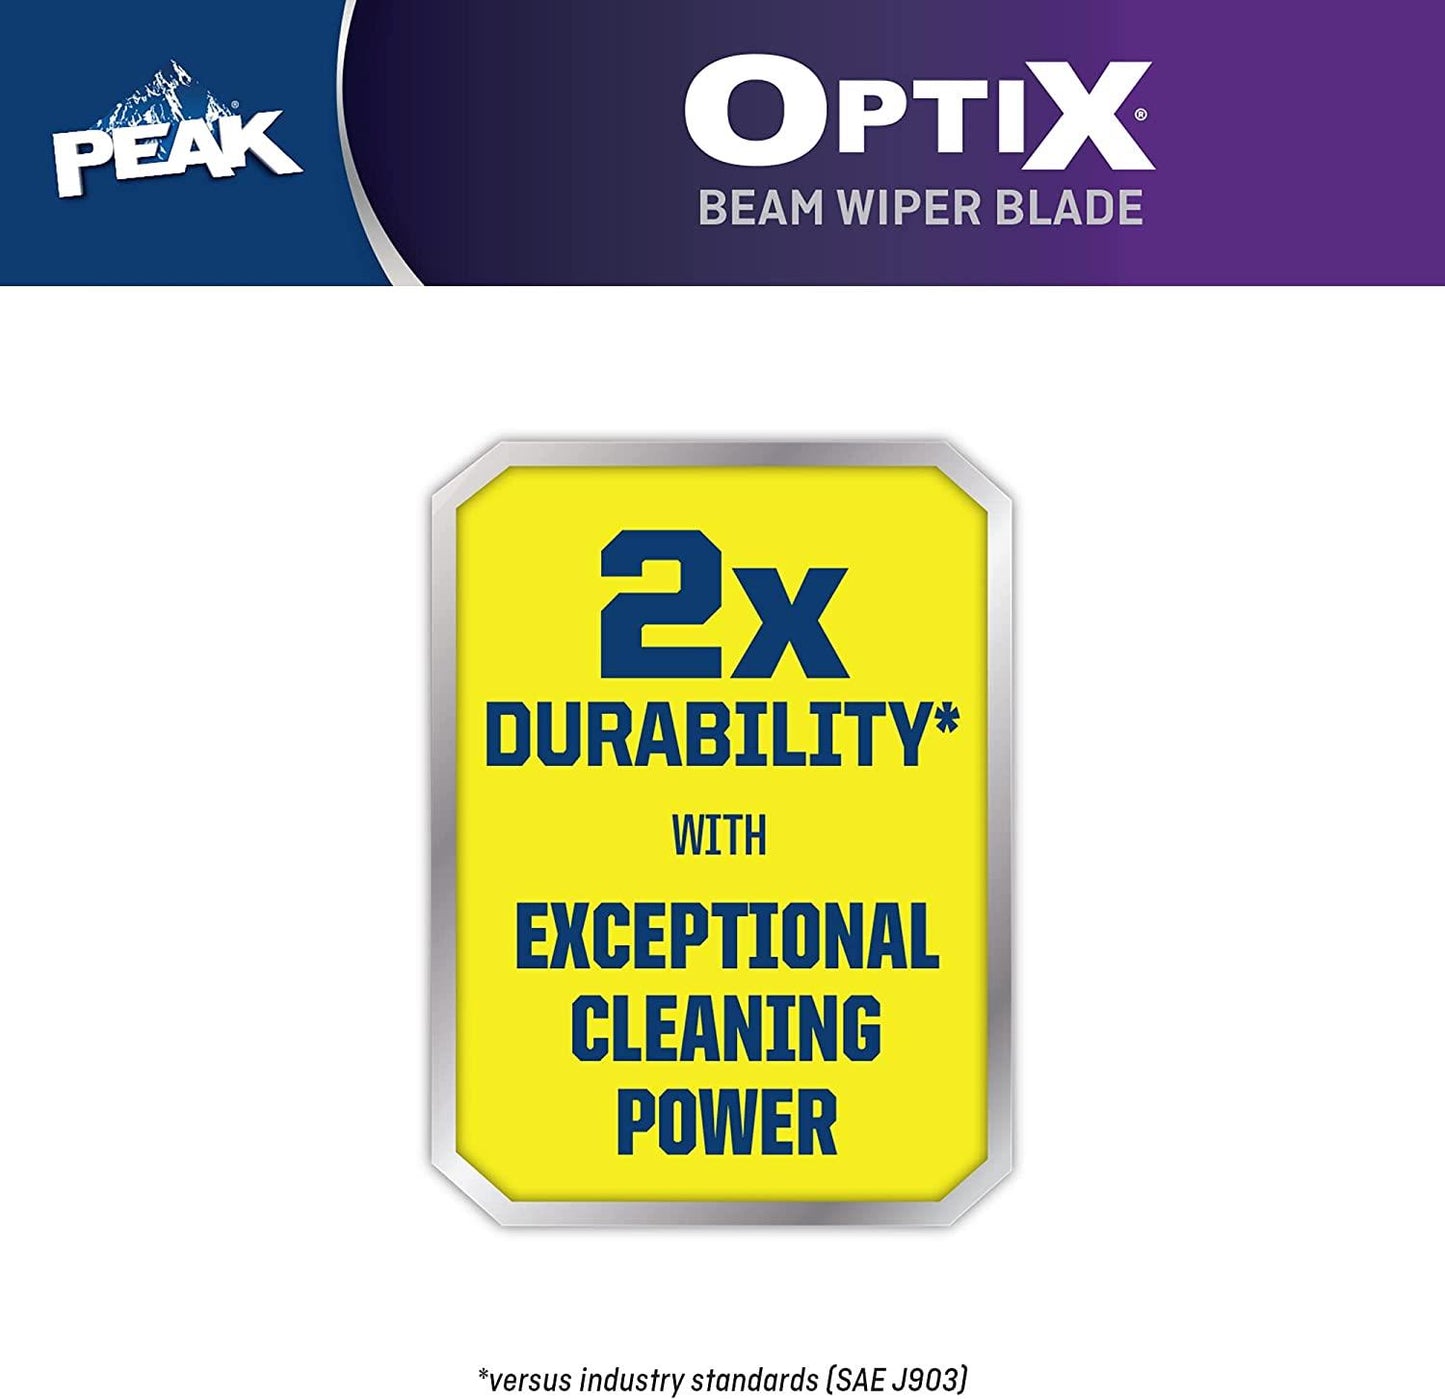 PEAK Optix Beam Wiper Blade, All-Weather Windshield Wiper Blade, Auto Replacement Part, 22", Pack of 1